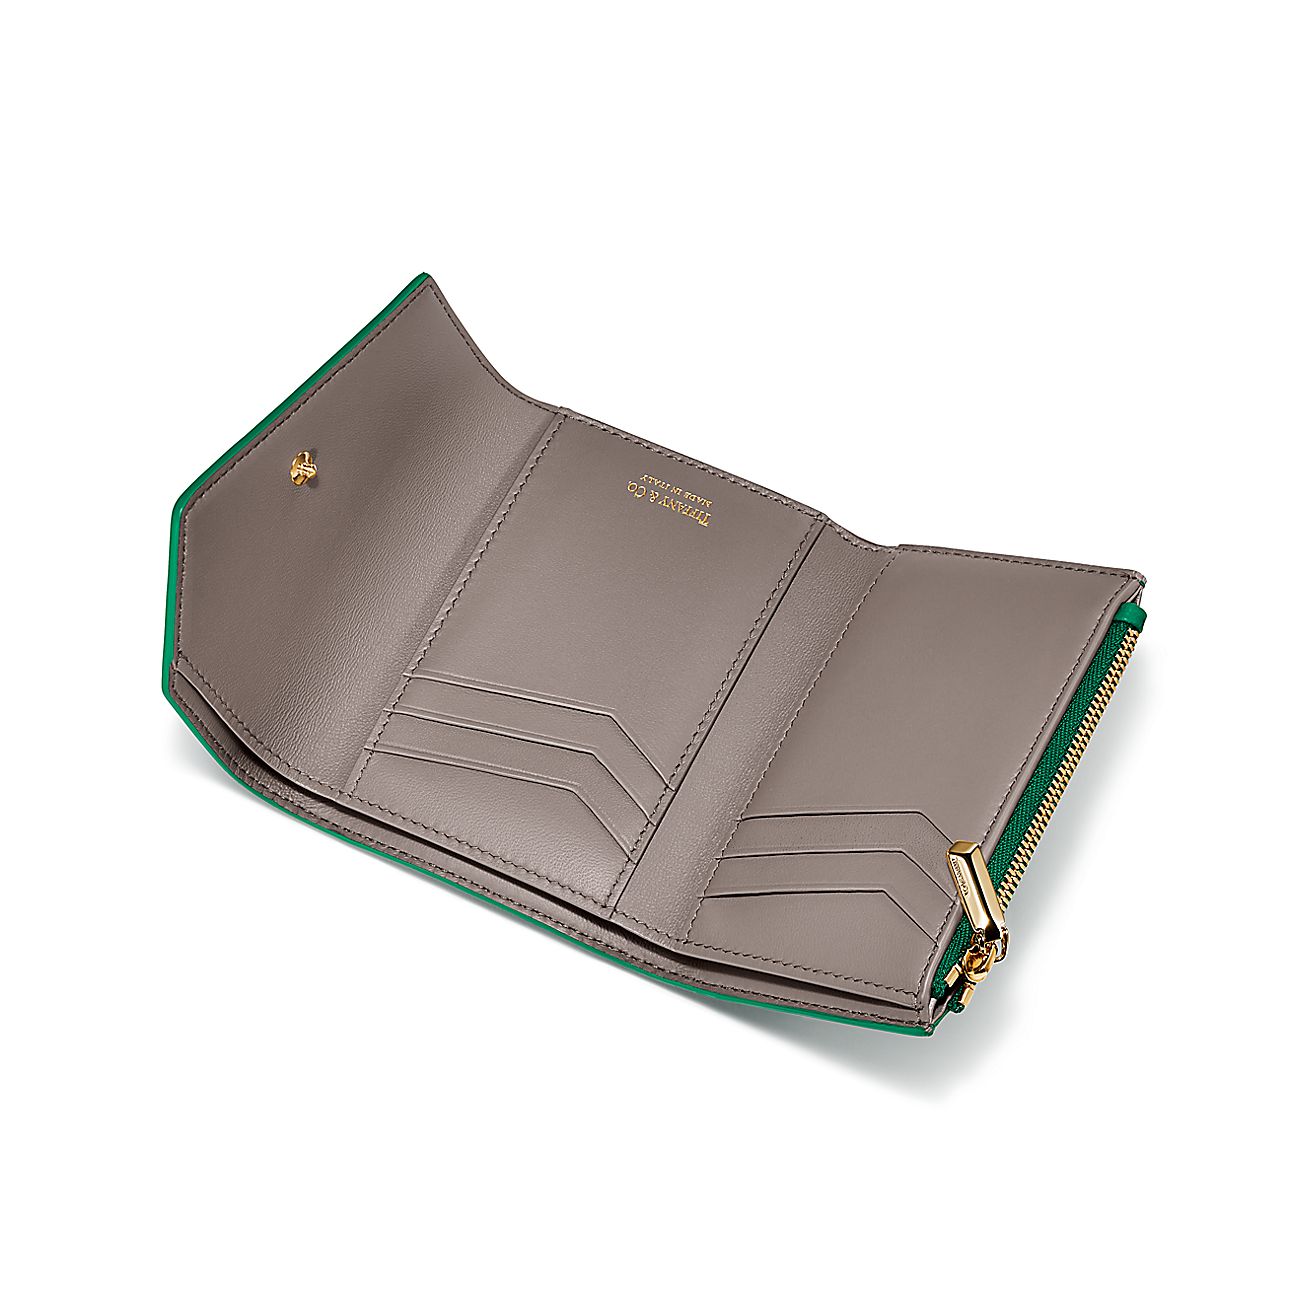 Tiffany T Zip Card Case in Emerald Green colourblock Leather